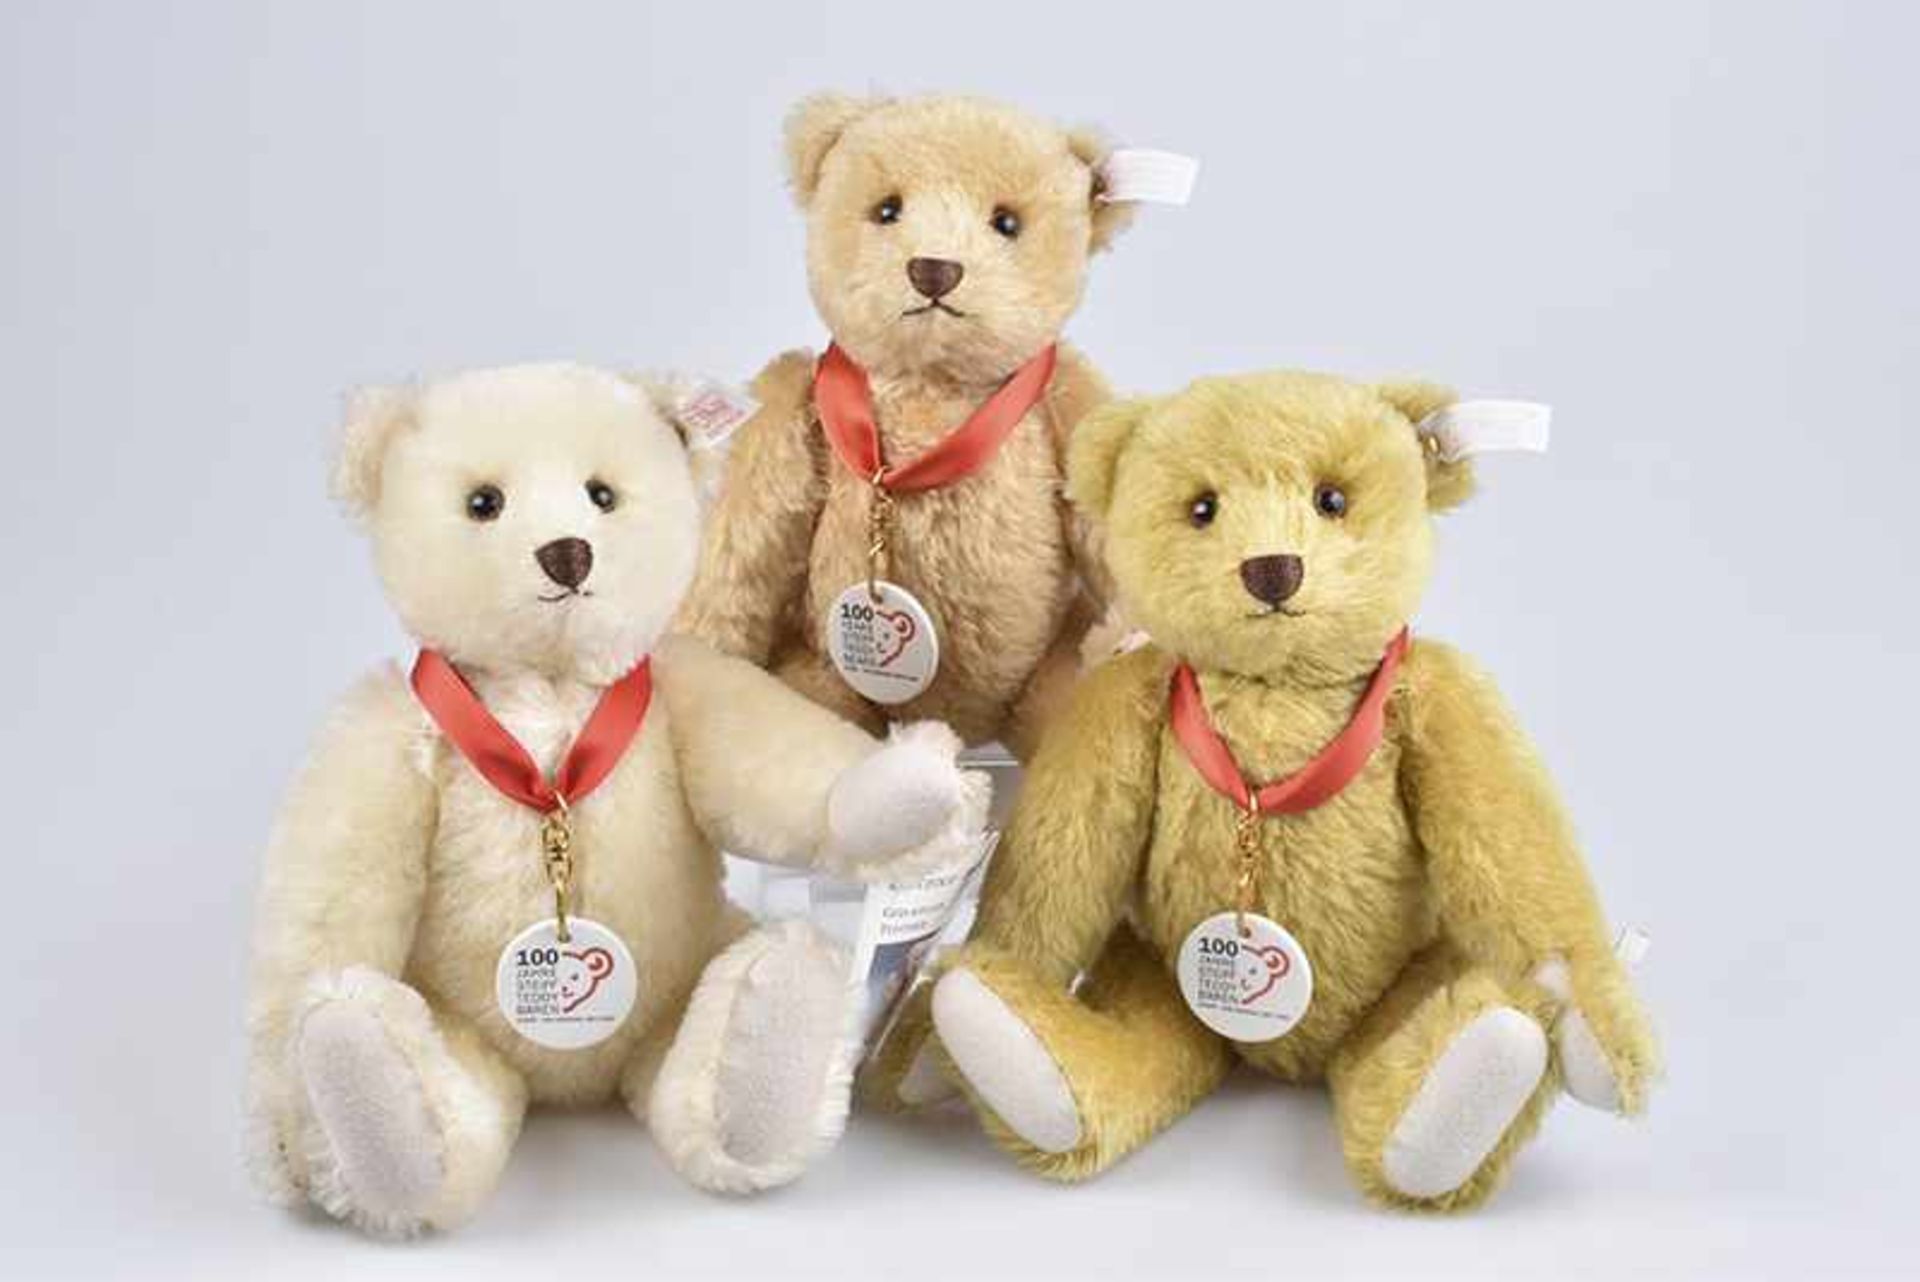 STEIFF 3 Teddybären, 100 Years STEIFF Teddy Bears, mit Zertifikat, Knopf, Fahne und